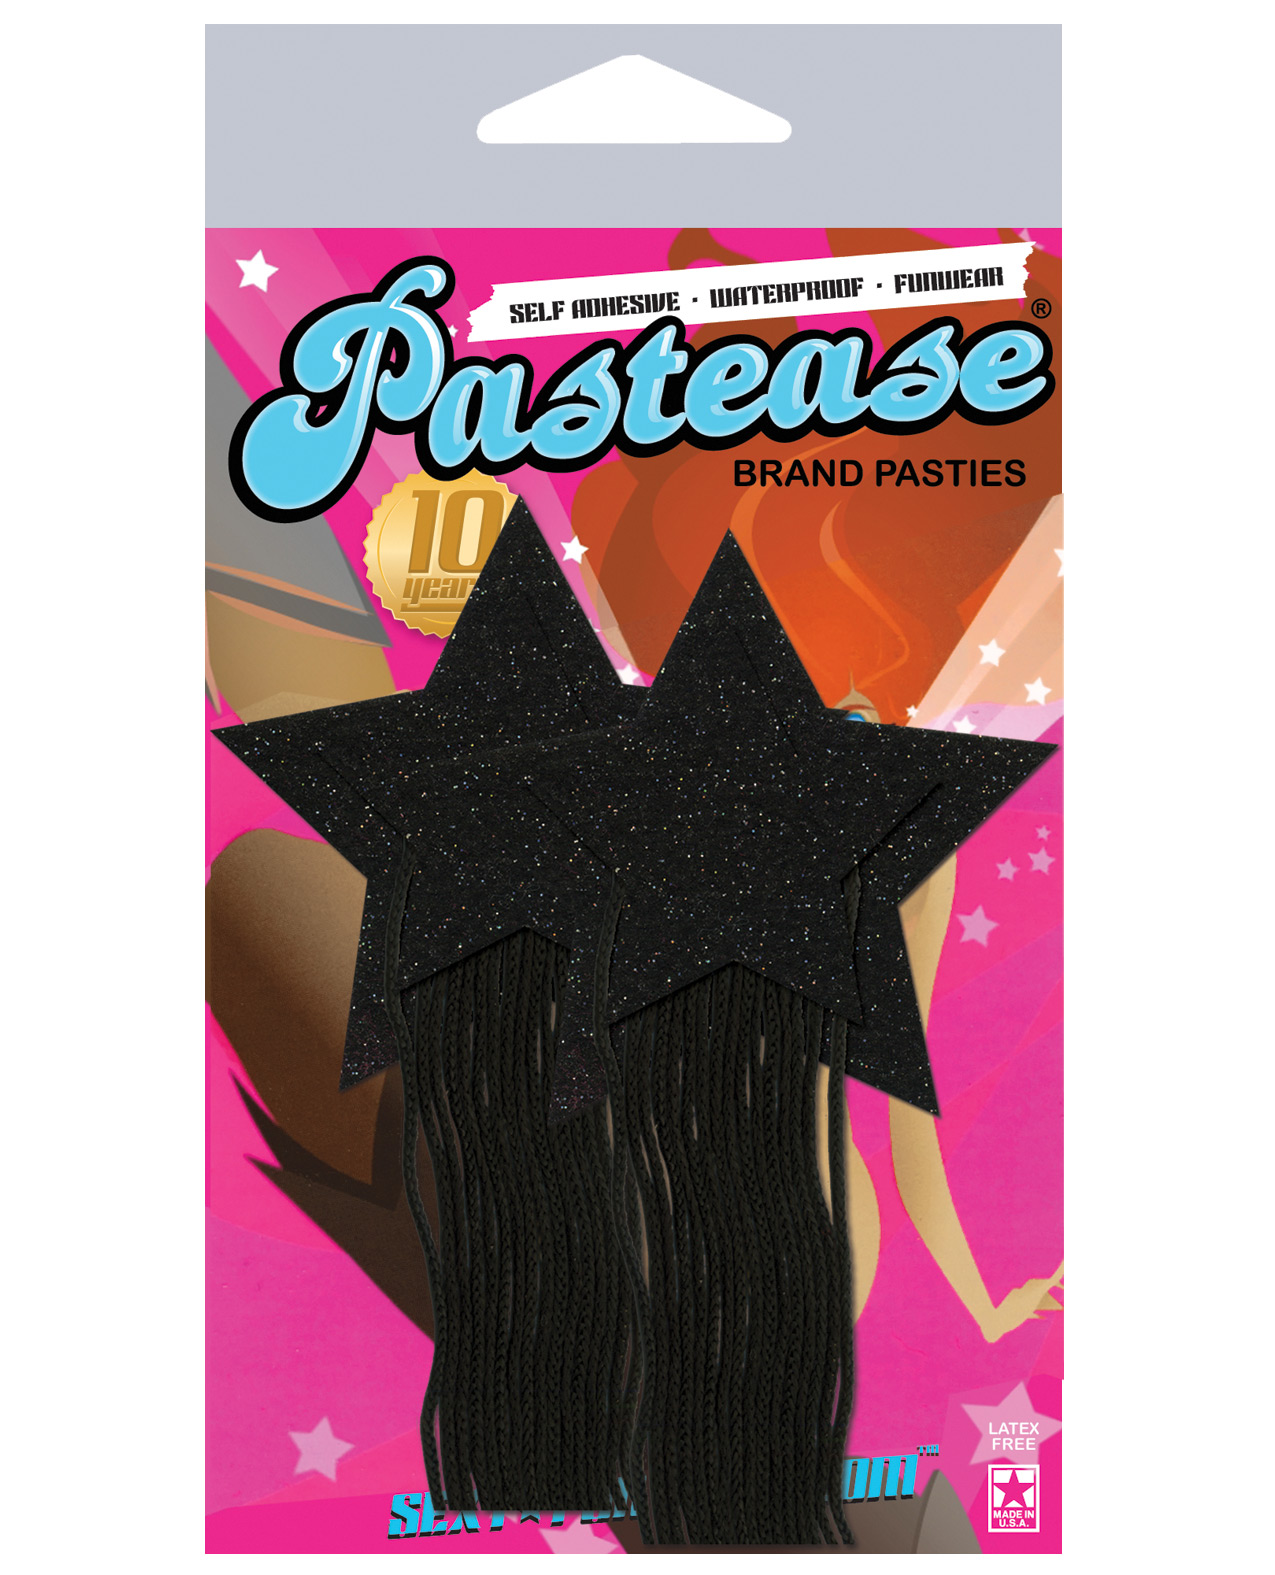 Pci fashion Women's Pastease Black Sparkle Tassle Stars - Standard for Valentines Day